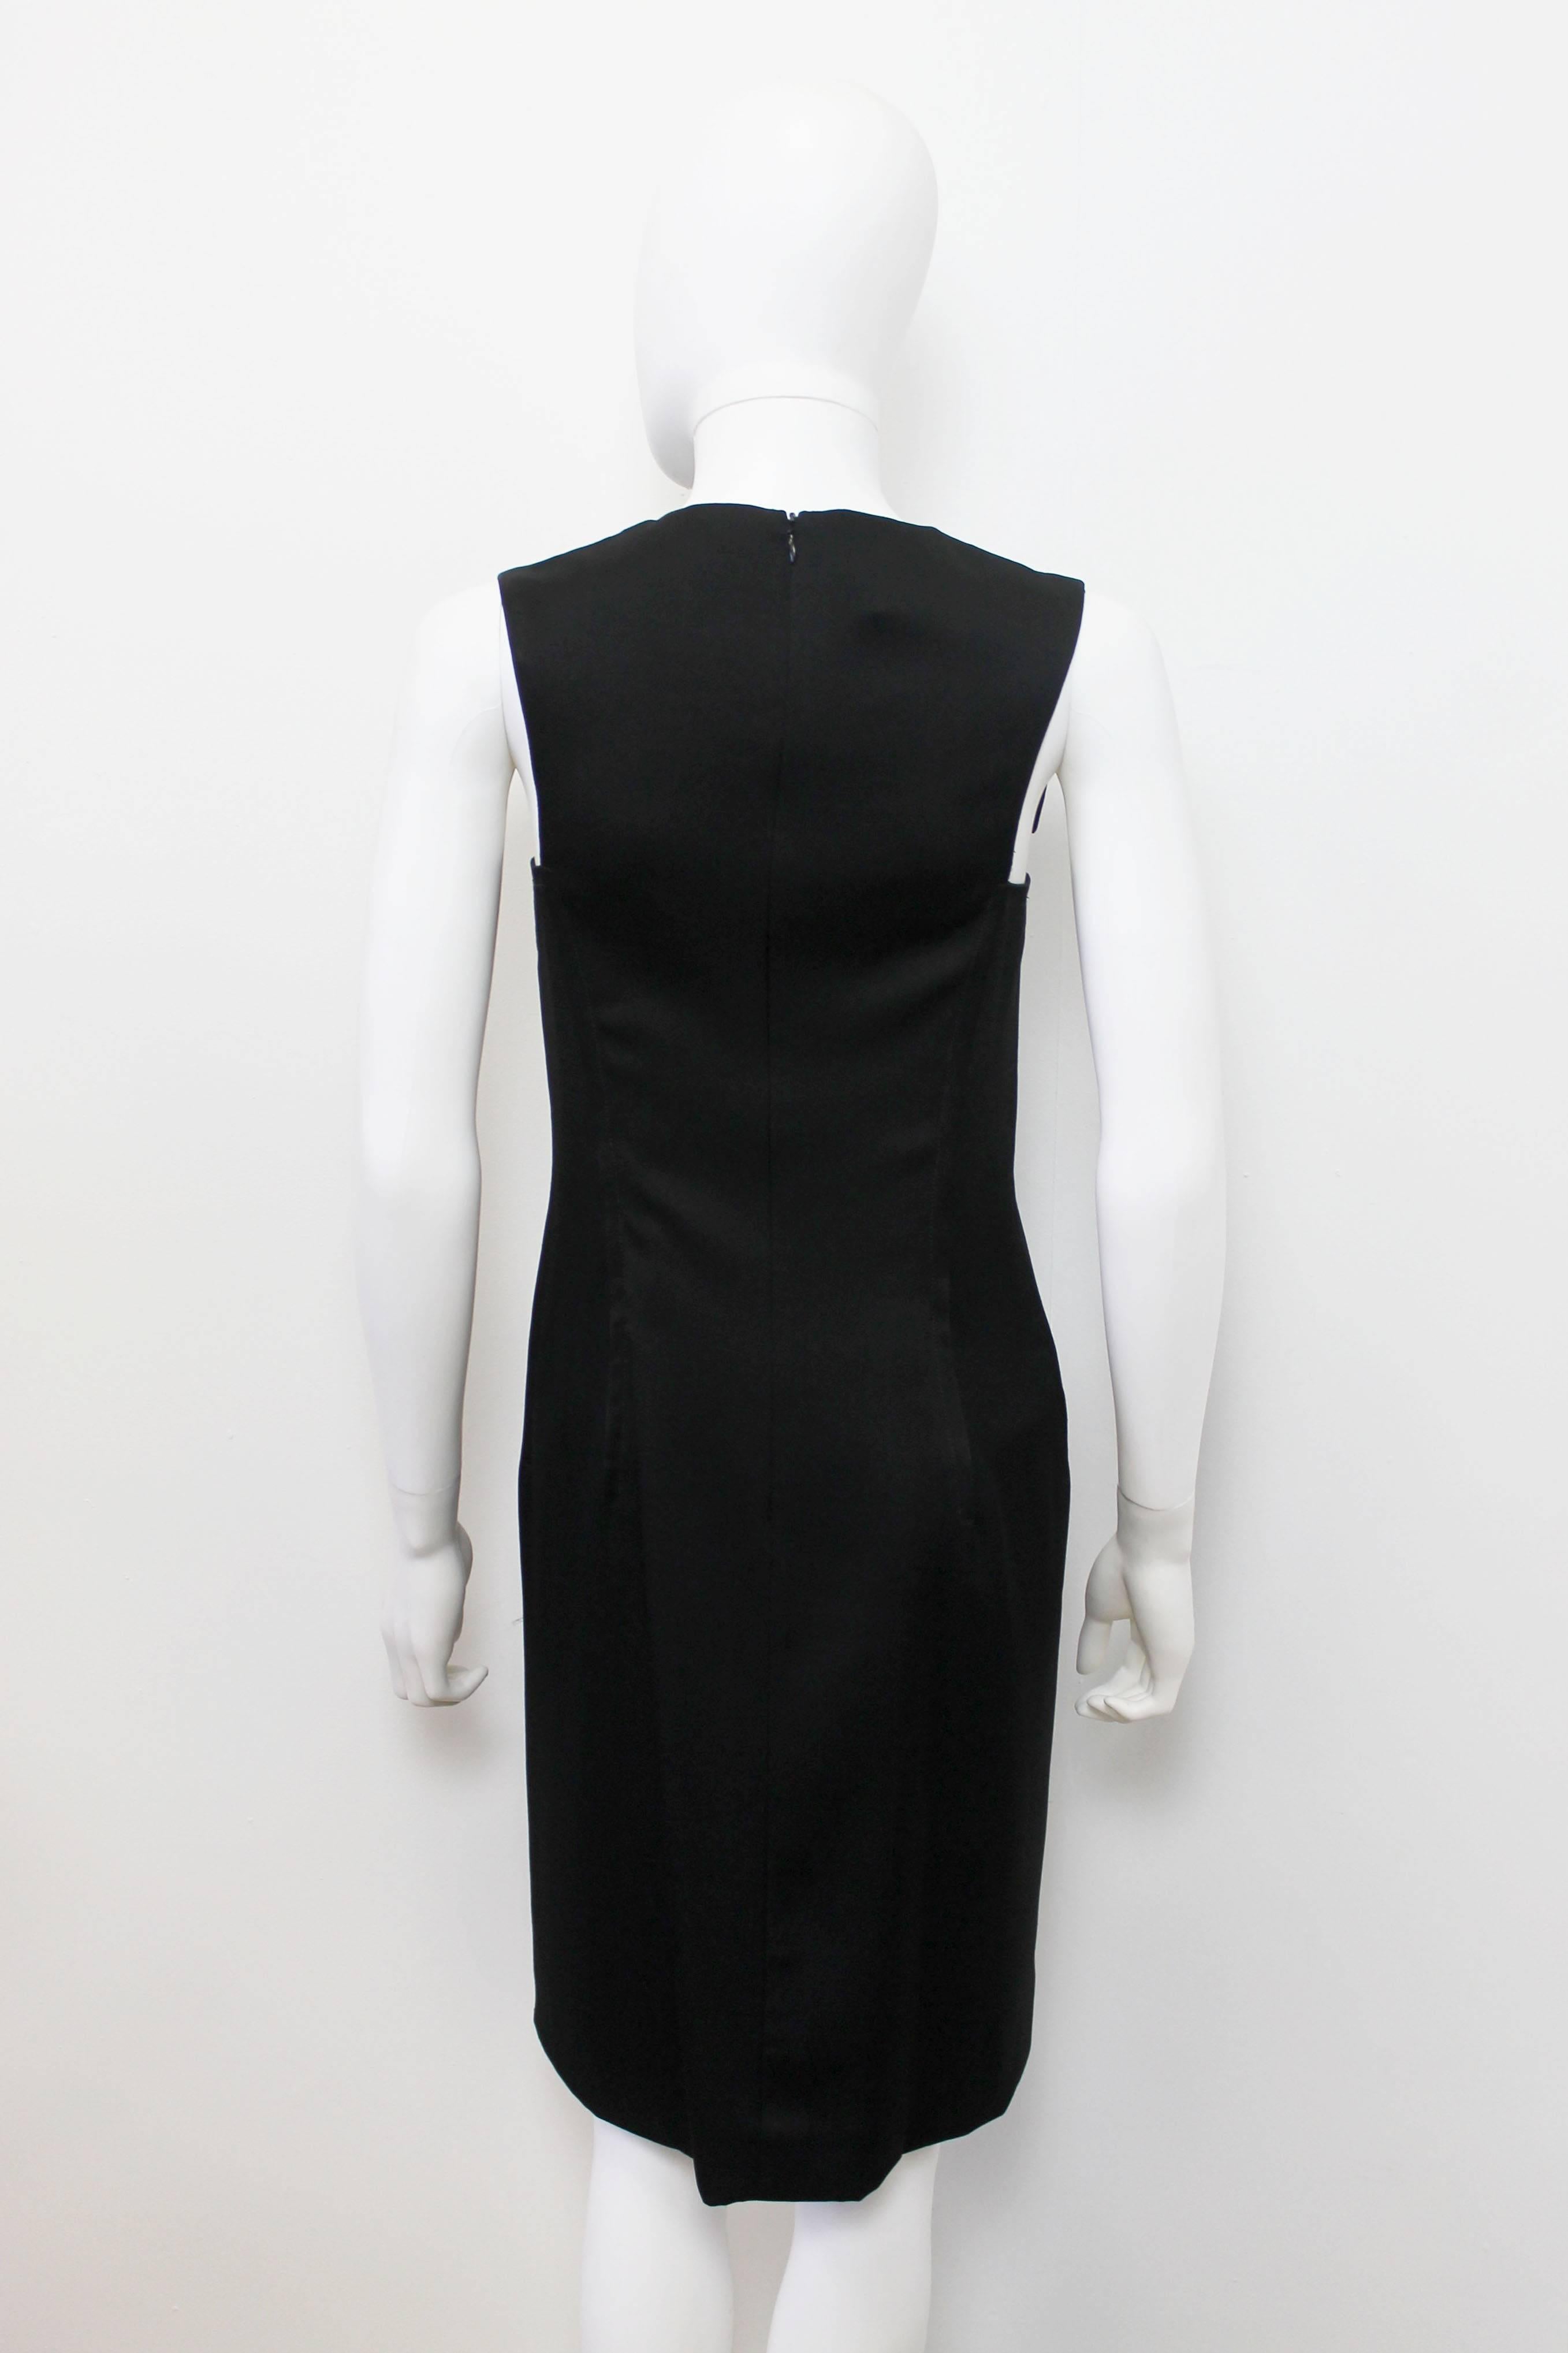 Givenchy Little Black Dress by Riccardo Tisci 1